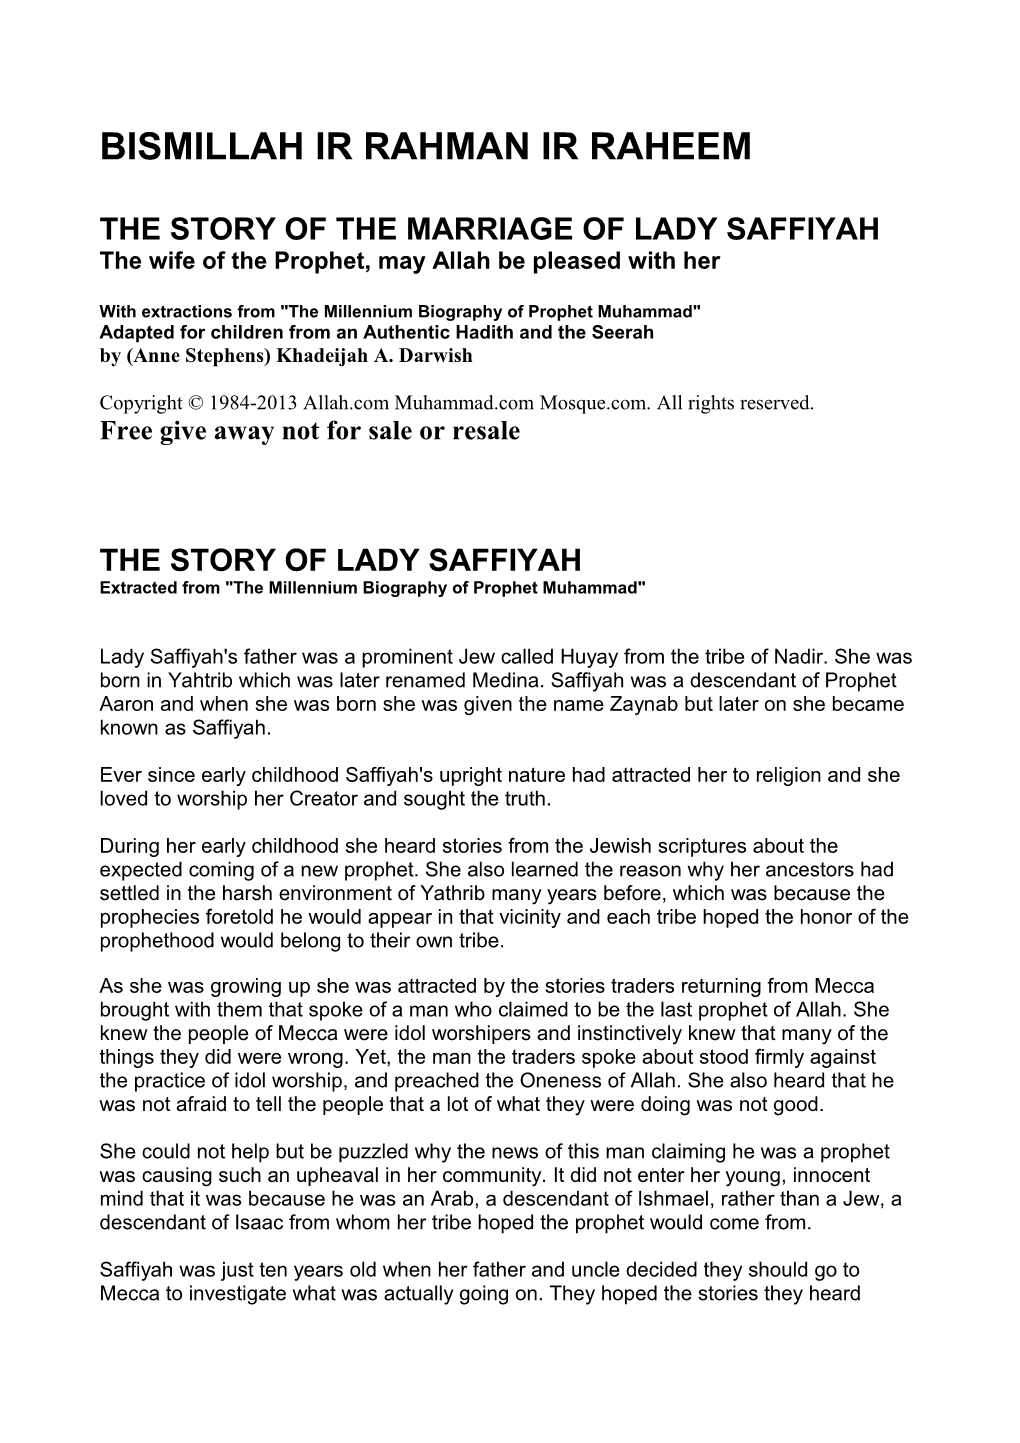 Lady Safiya Was the Daughter of Huyay from the Jewish Tribe of Nadir